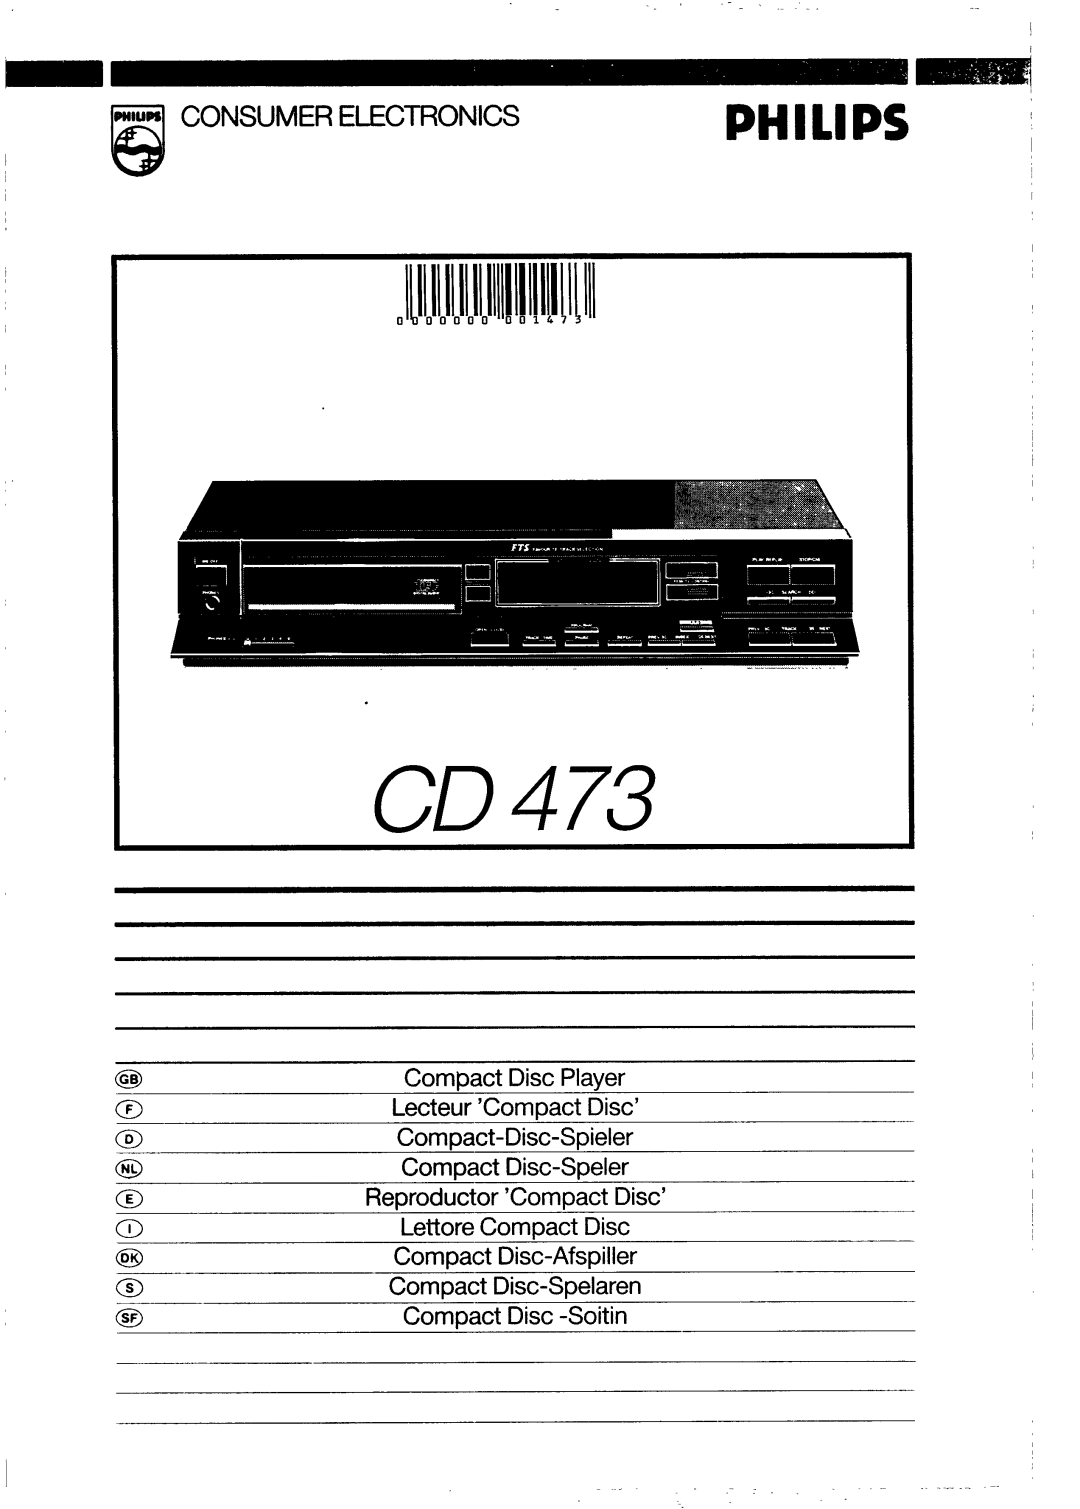 Philips CD 473 manual 